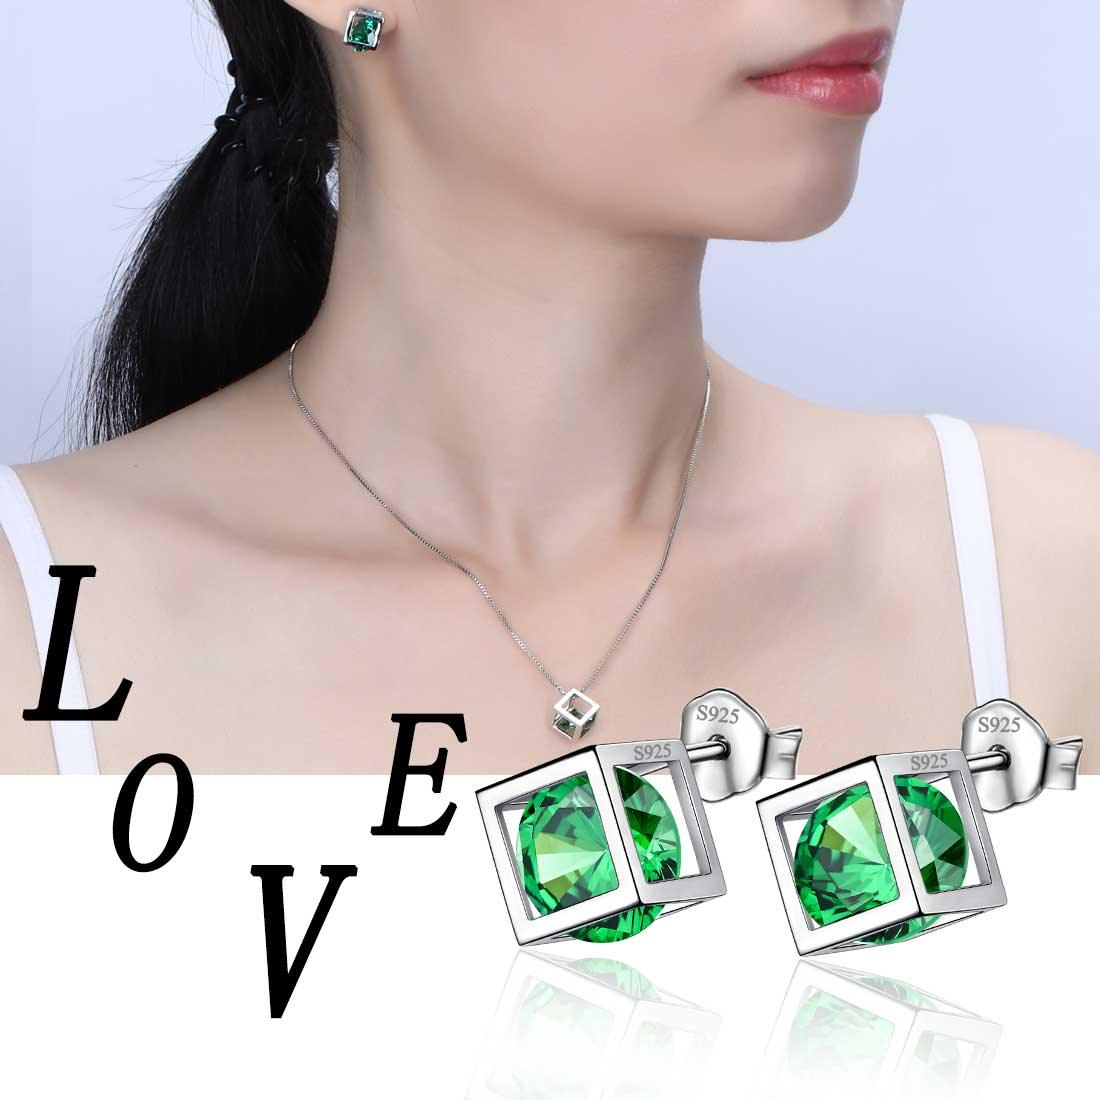 3D Cube Birthstone May Emerald Jewelry Set 3PCS - Jewelry Set - Aurora Tears